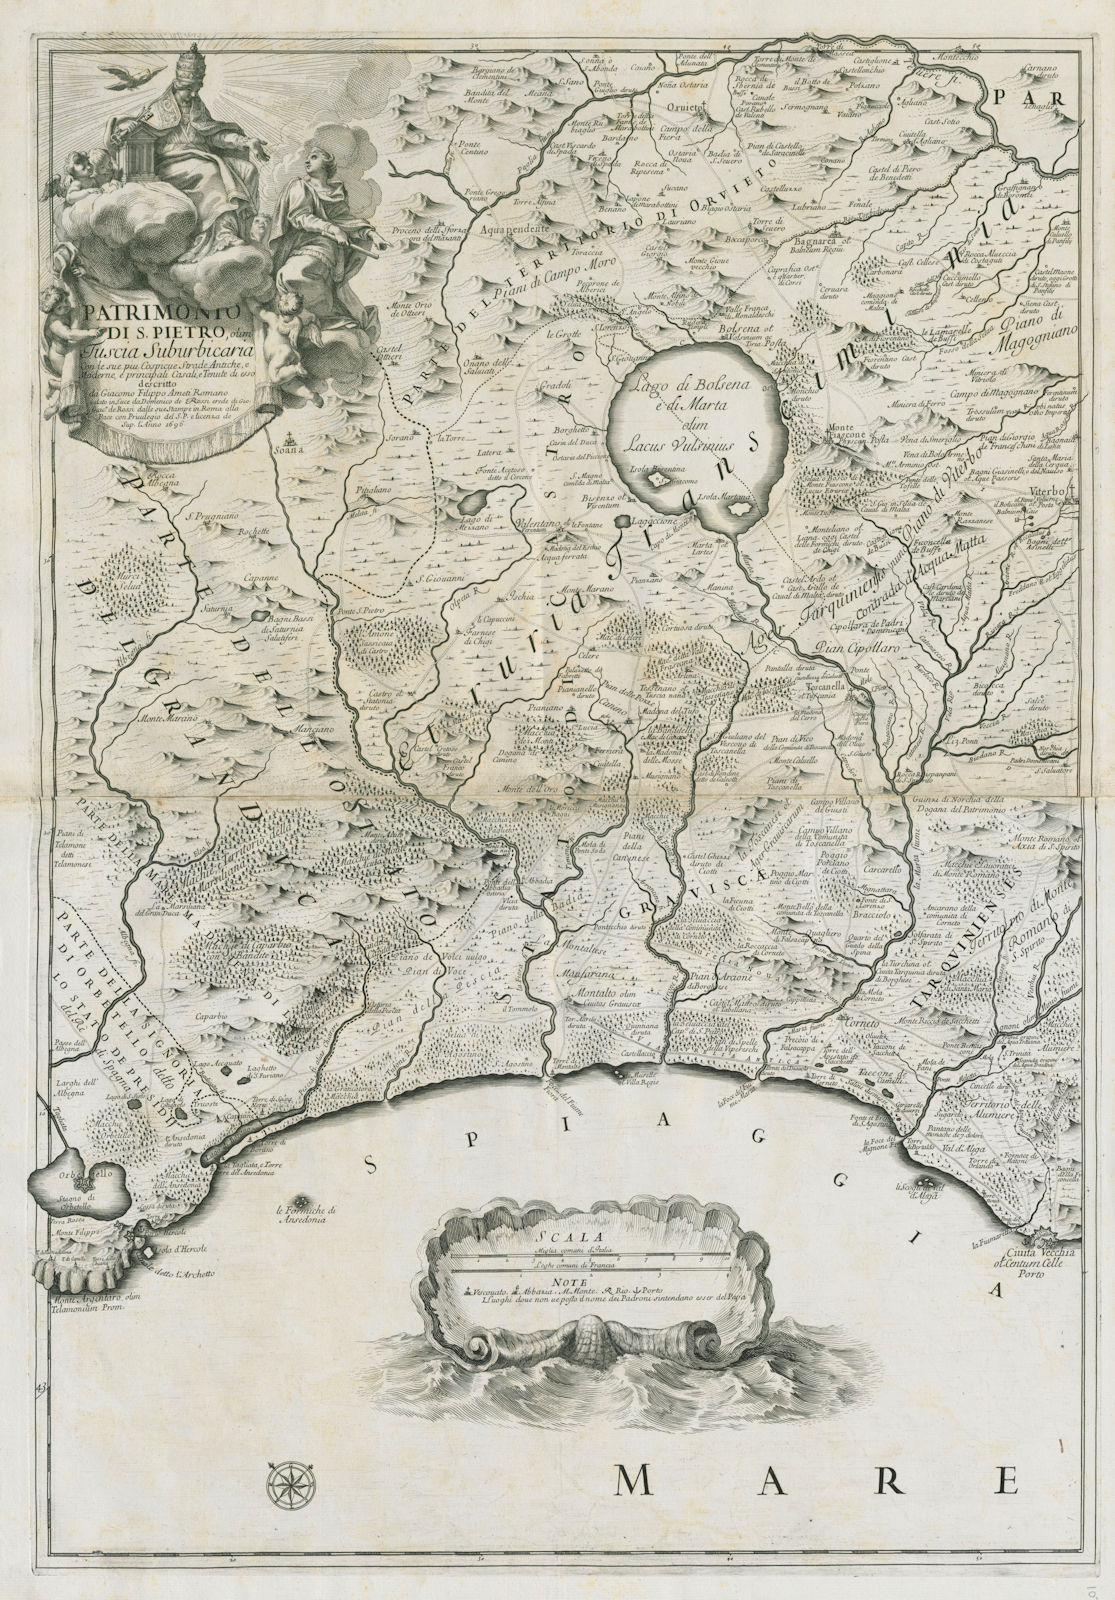 Patrimonio di S.Pietro, olim Tuscia Suburbicaria. Tuscany/Lazio. ROSSI 1696 map